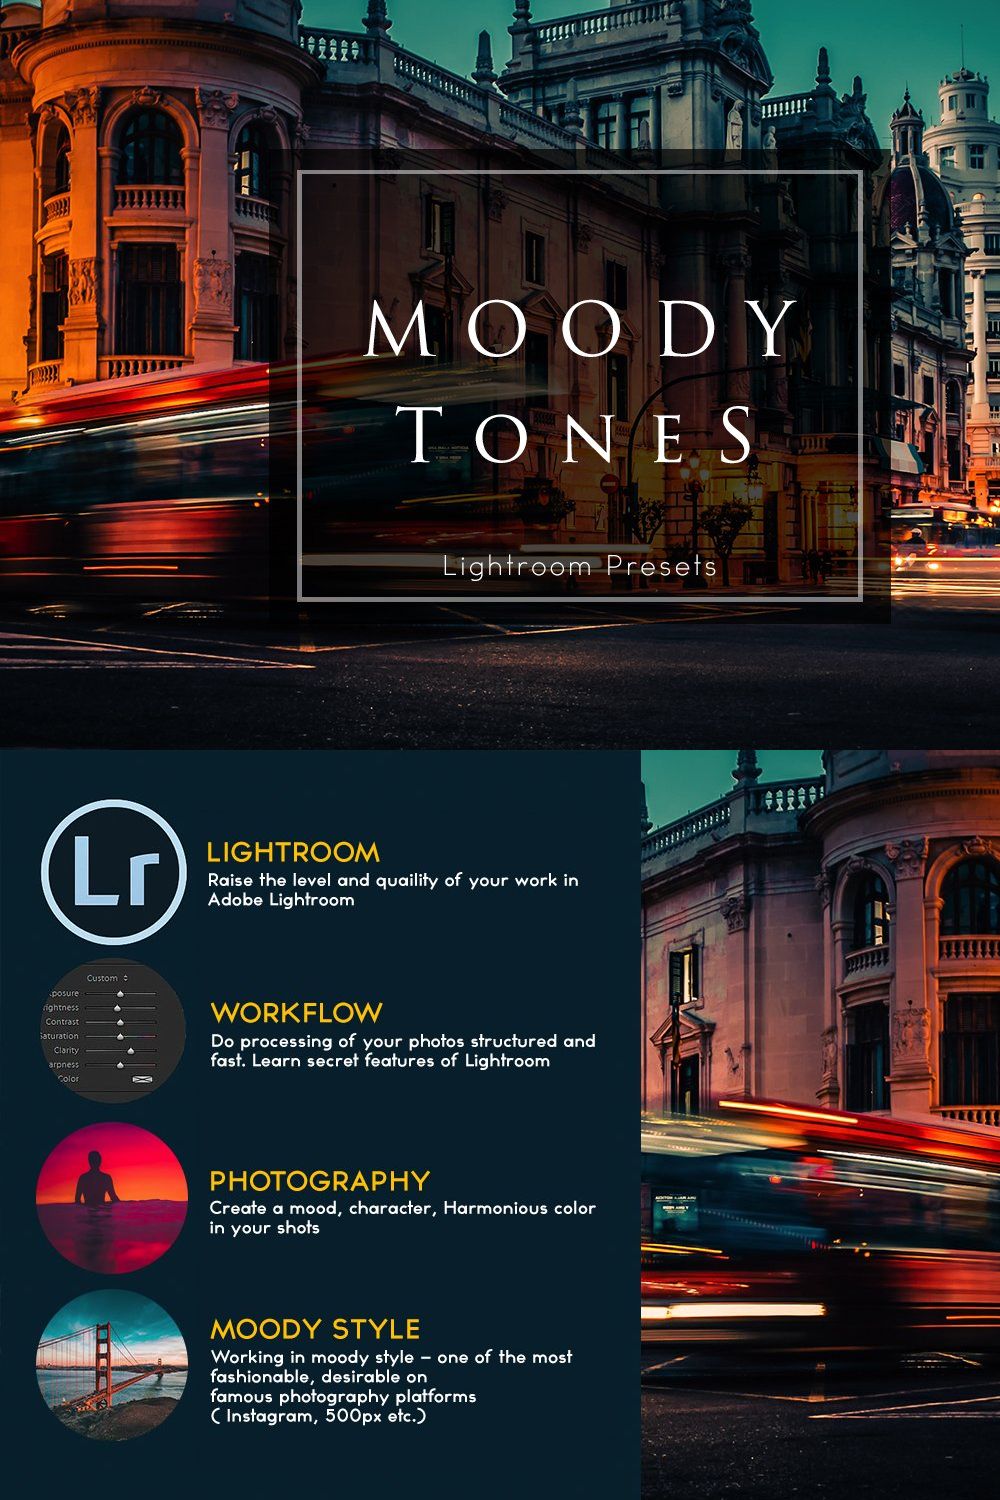 Moody Lightroom Presets pinterest preview image.